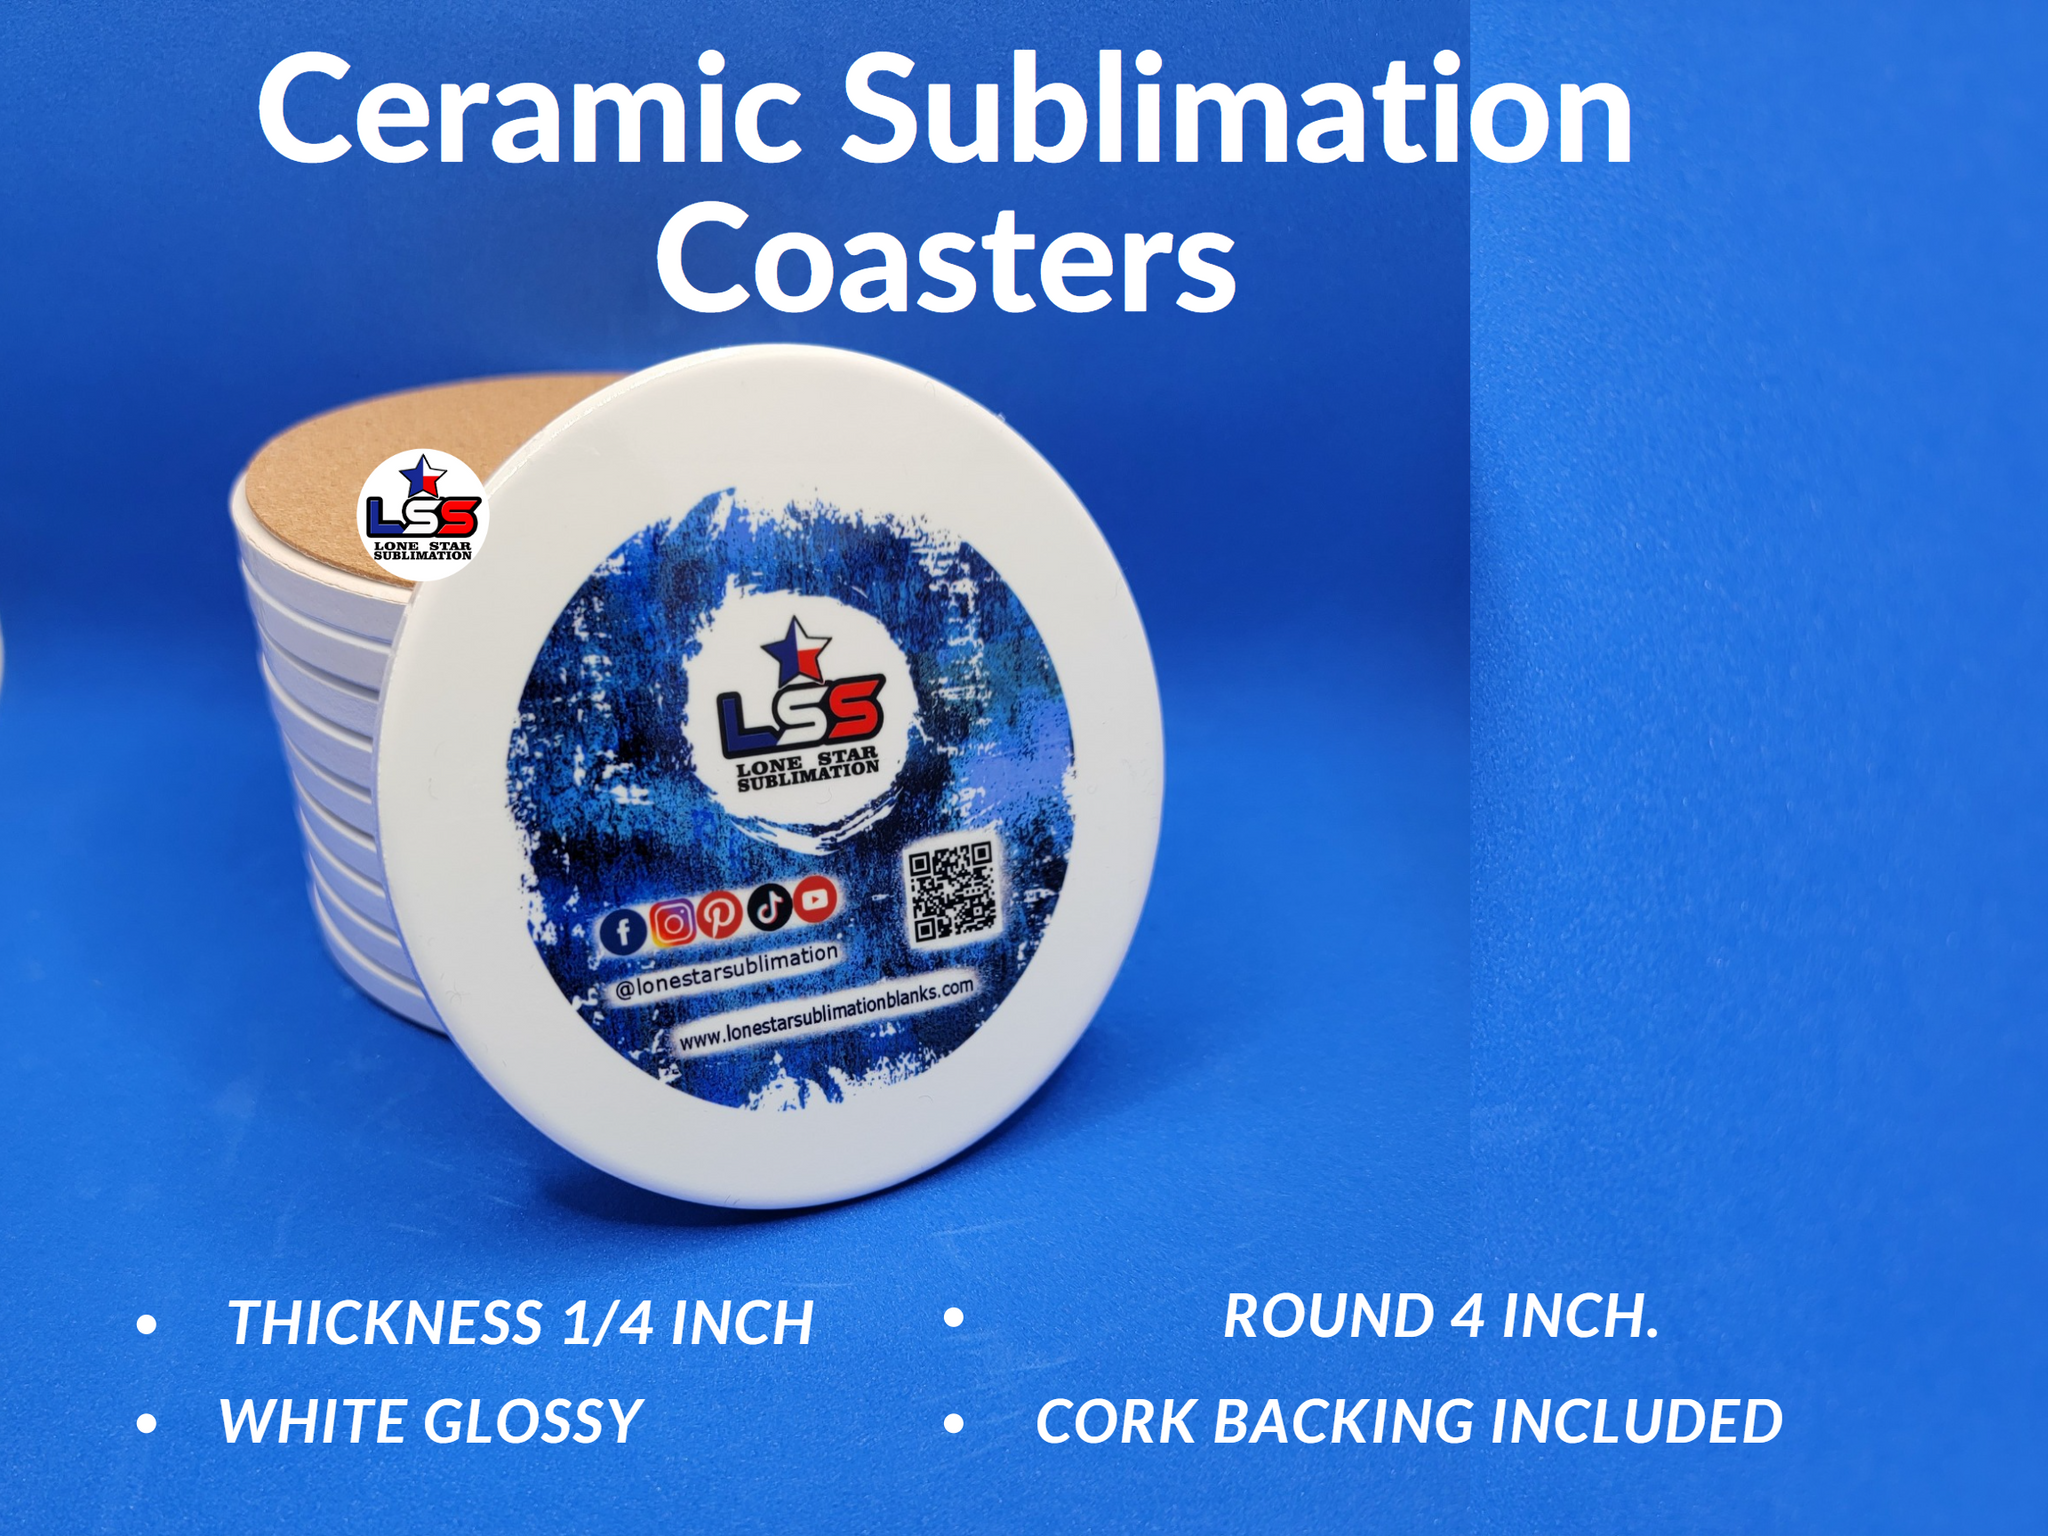 Ceramic sublimation coasters, cork backing included, single side